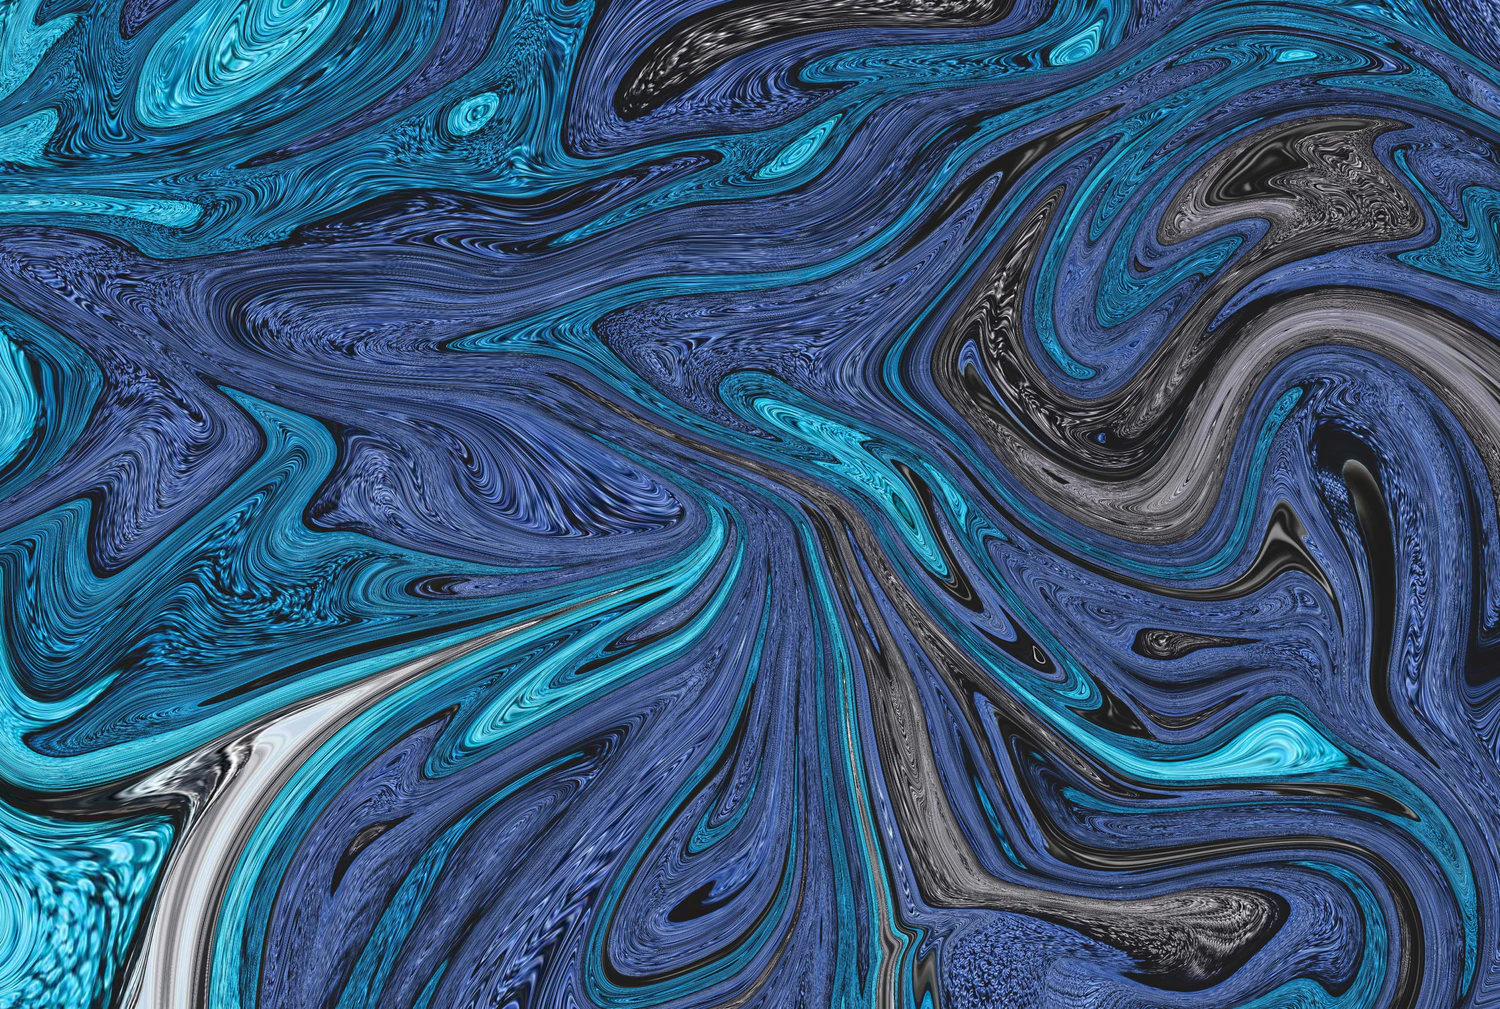 2227 41款奶油液化抽象纹理背景素材 Liquify Abstract Textures